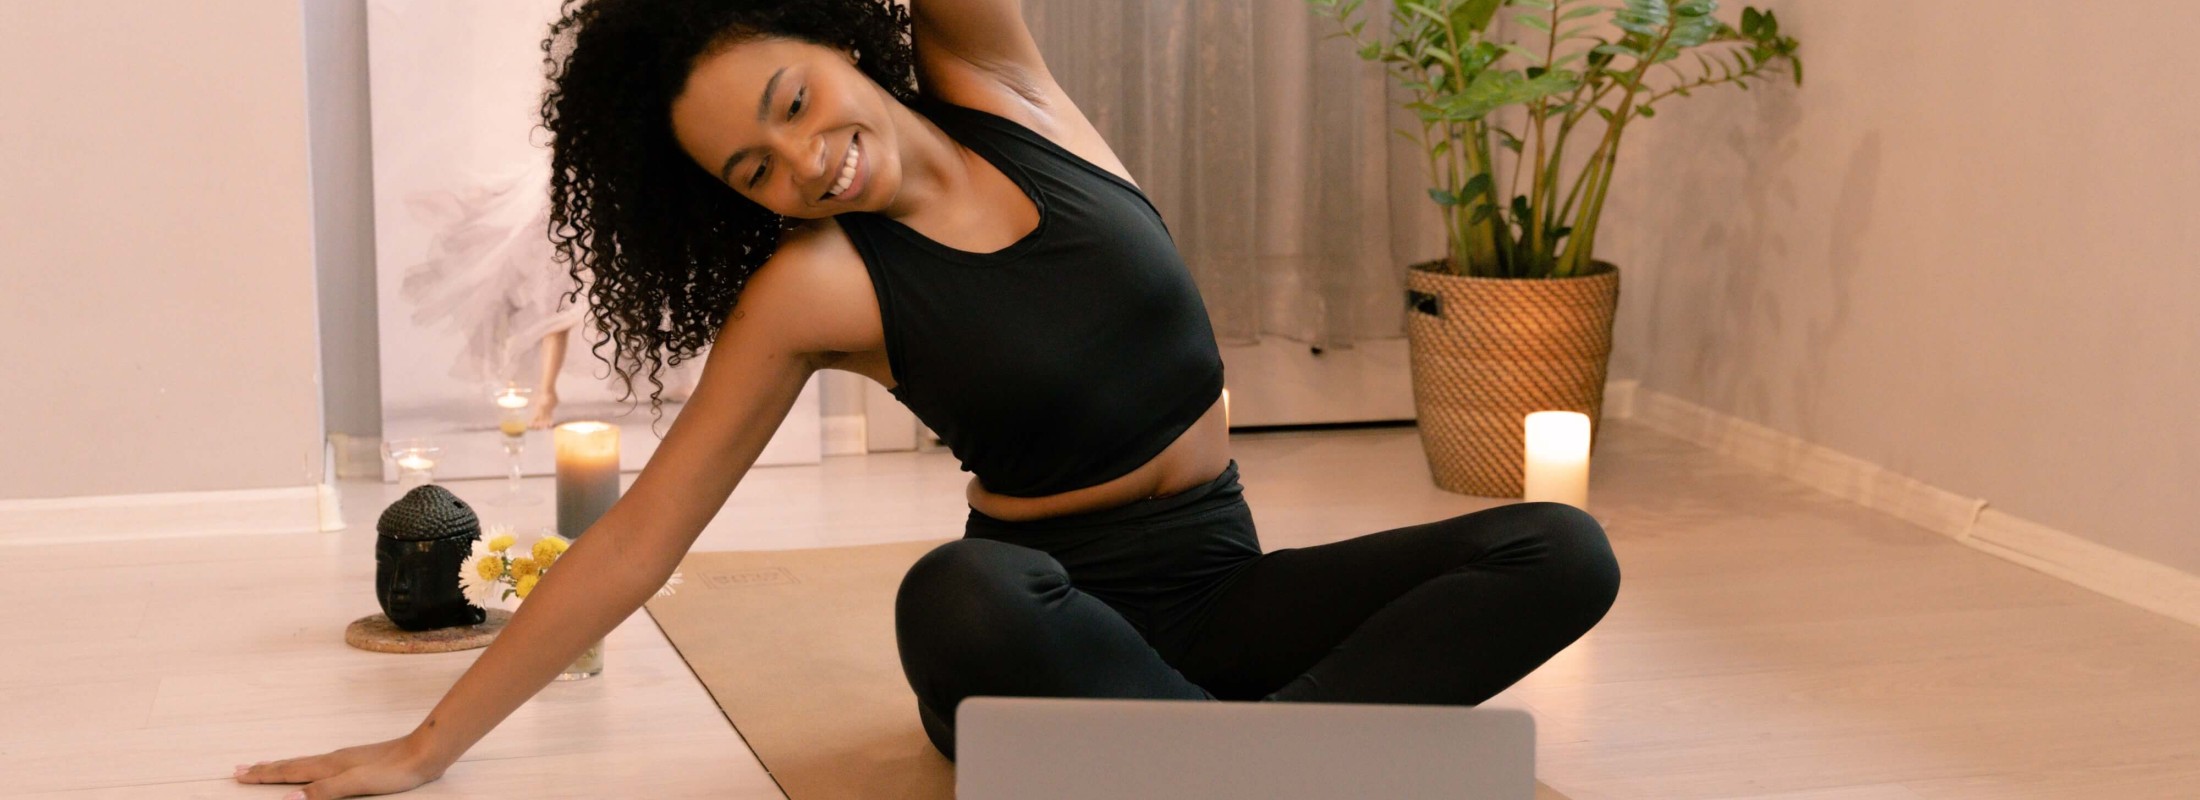 vrouw doet yoga oefening thuis